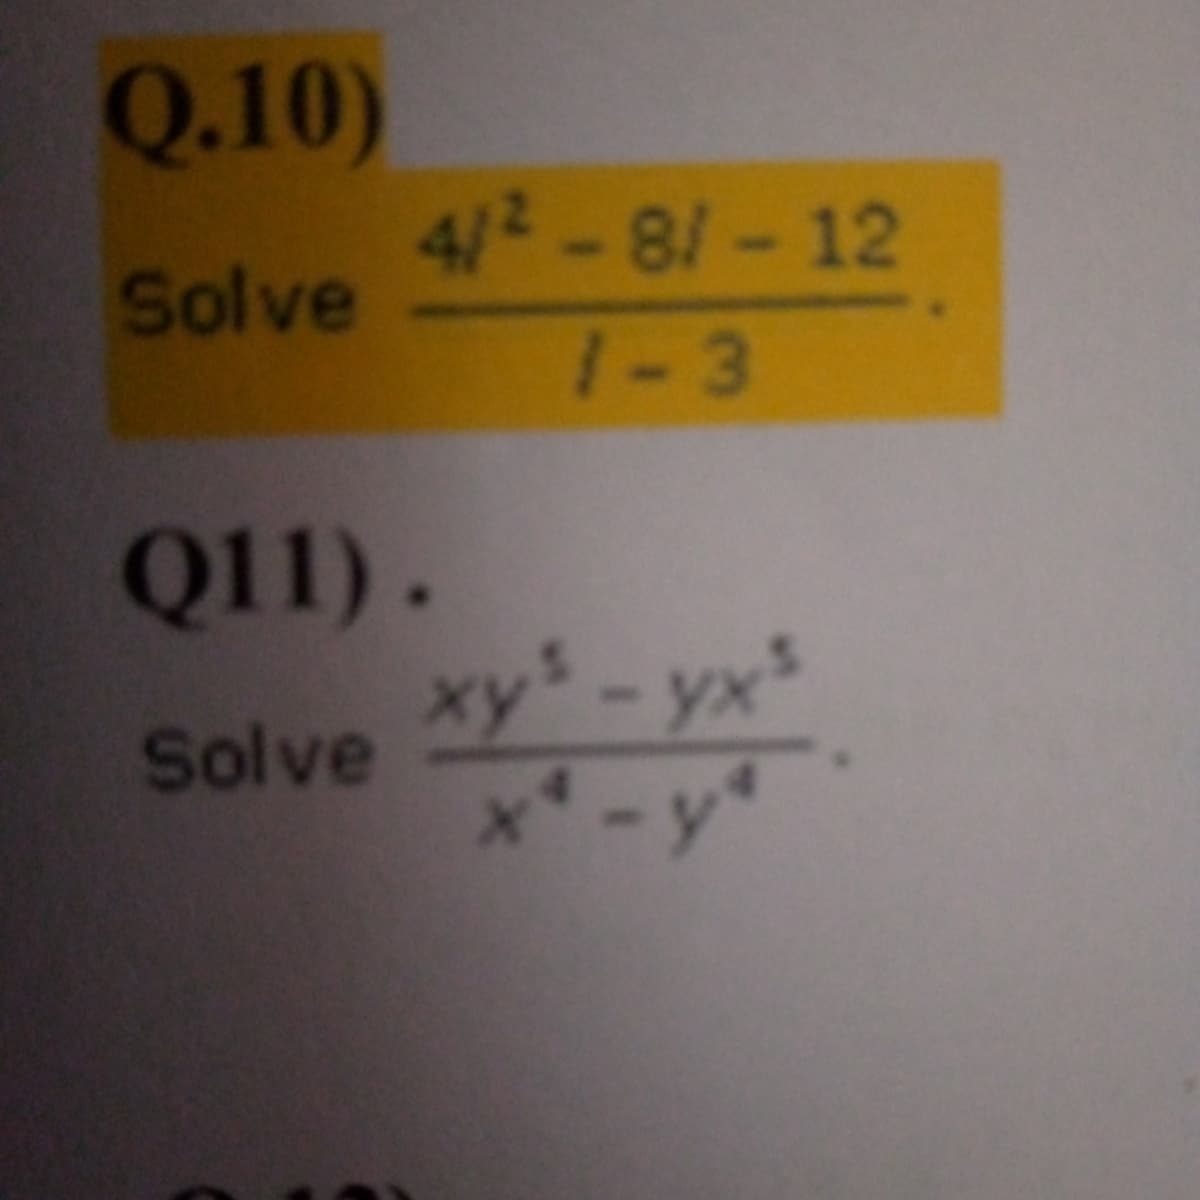 Q.10)
4/2-8/-12
1-3
Solve
Q11).
xy-yx'
x-y
Solve
